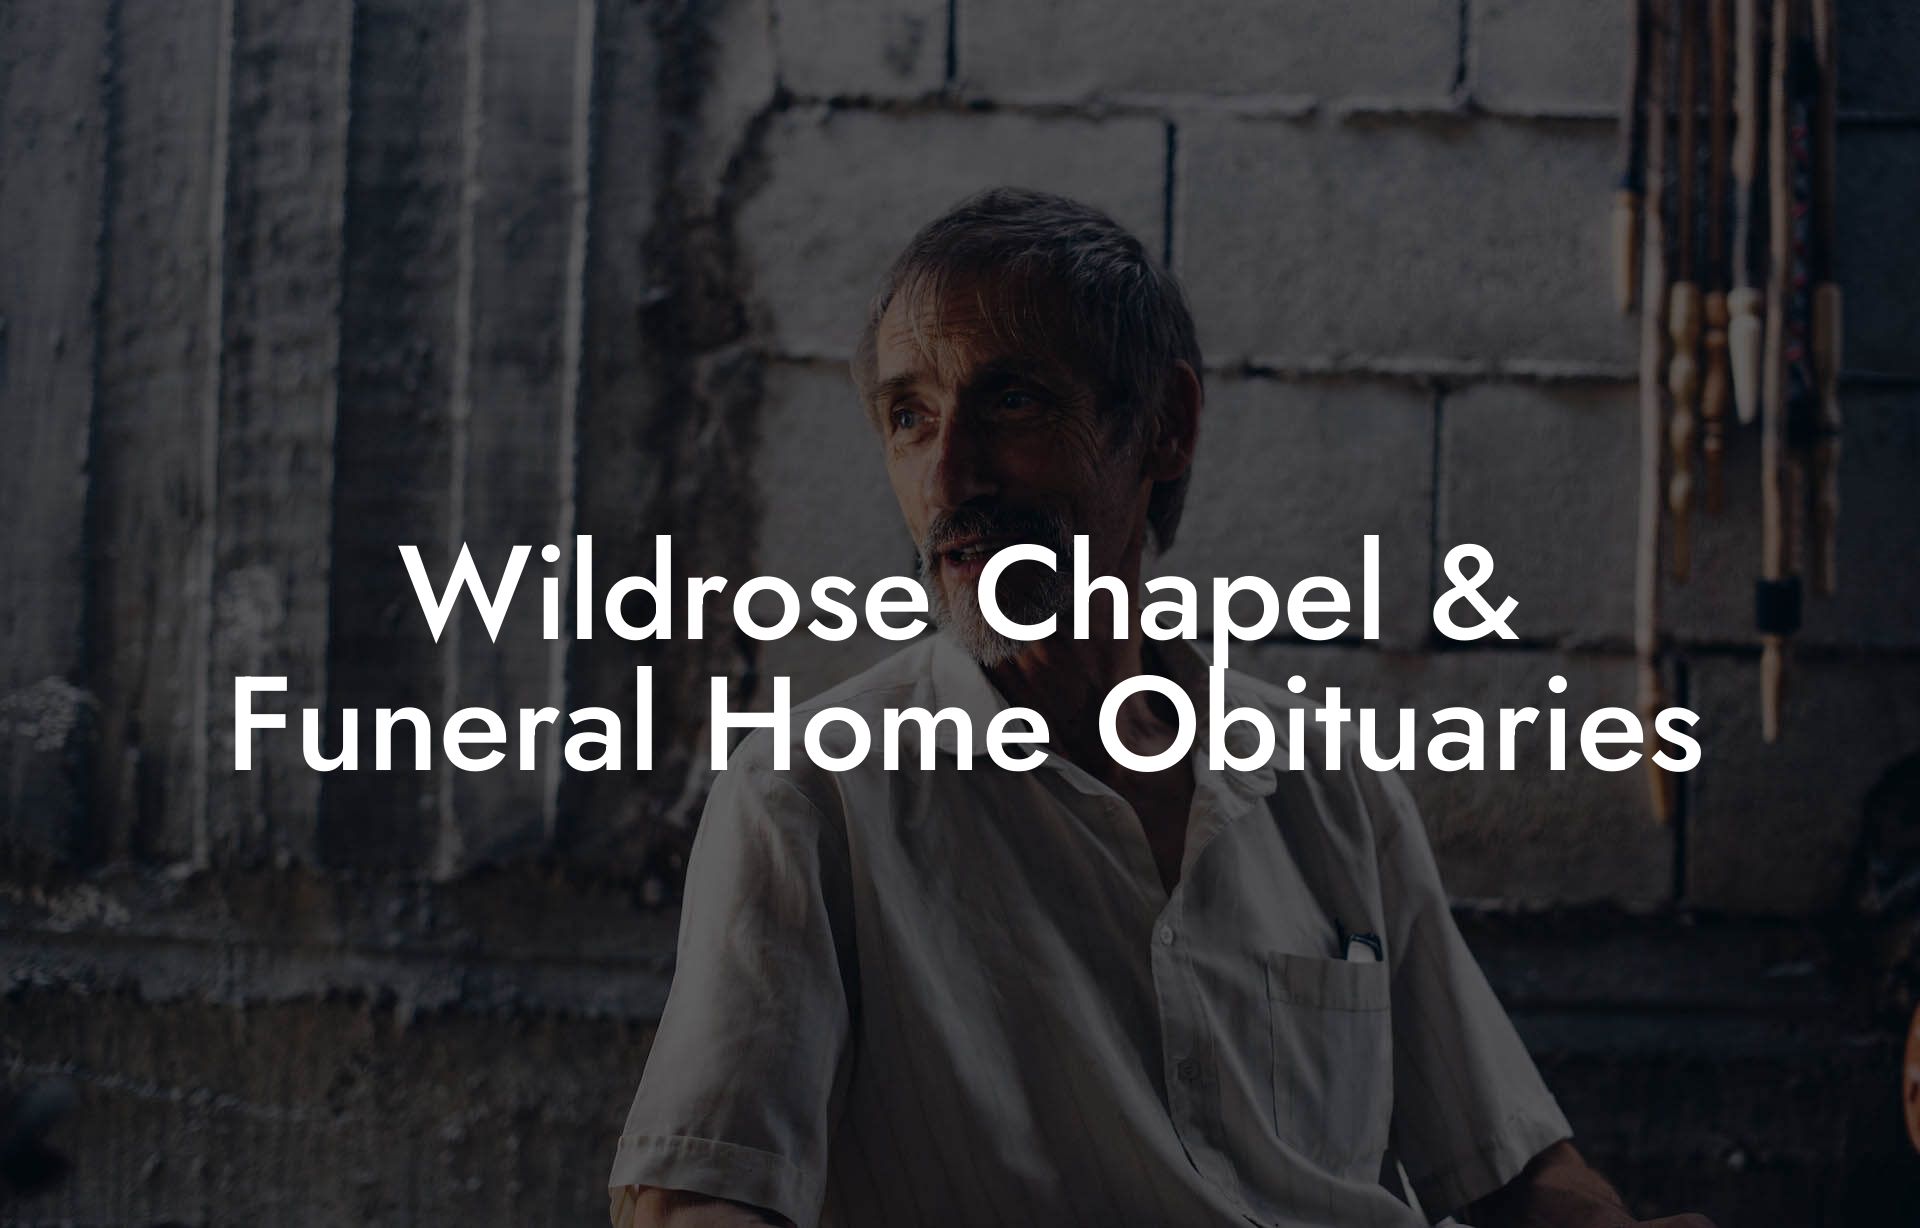 Wildrose Chapel & Funeral Home Obituaries